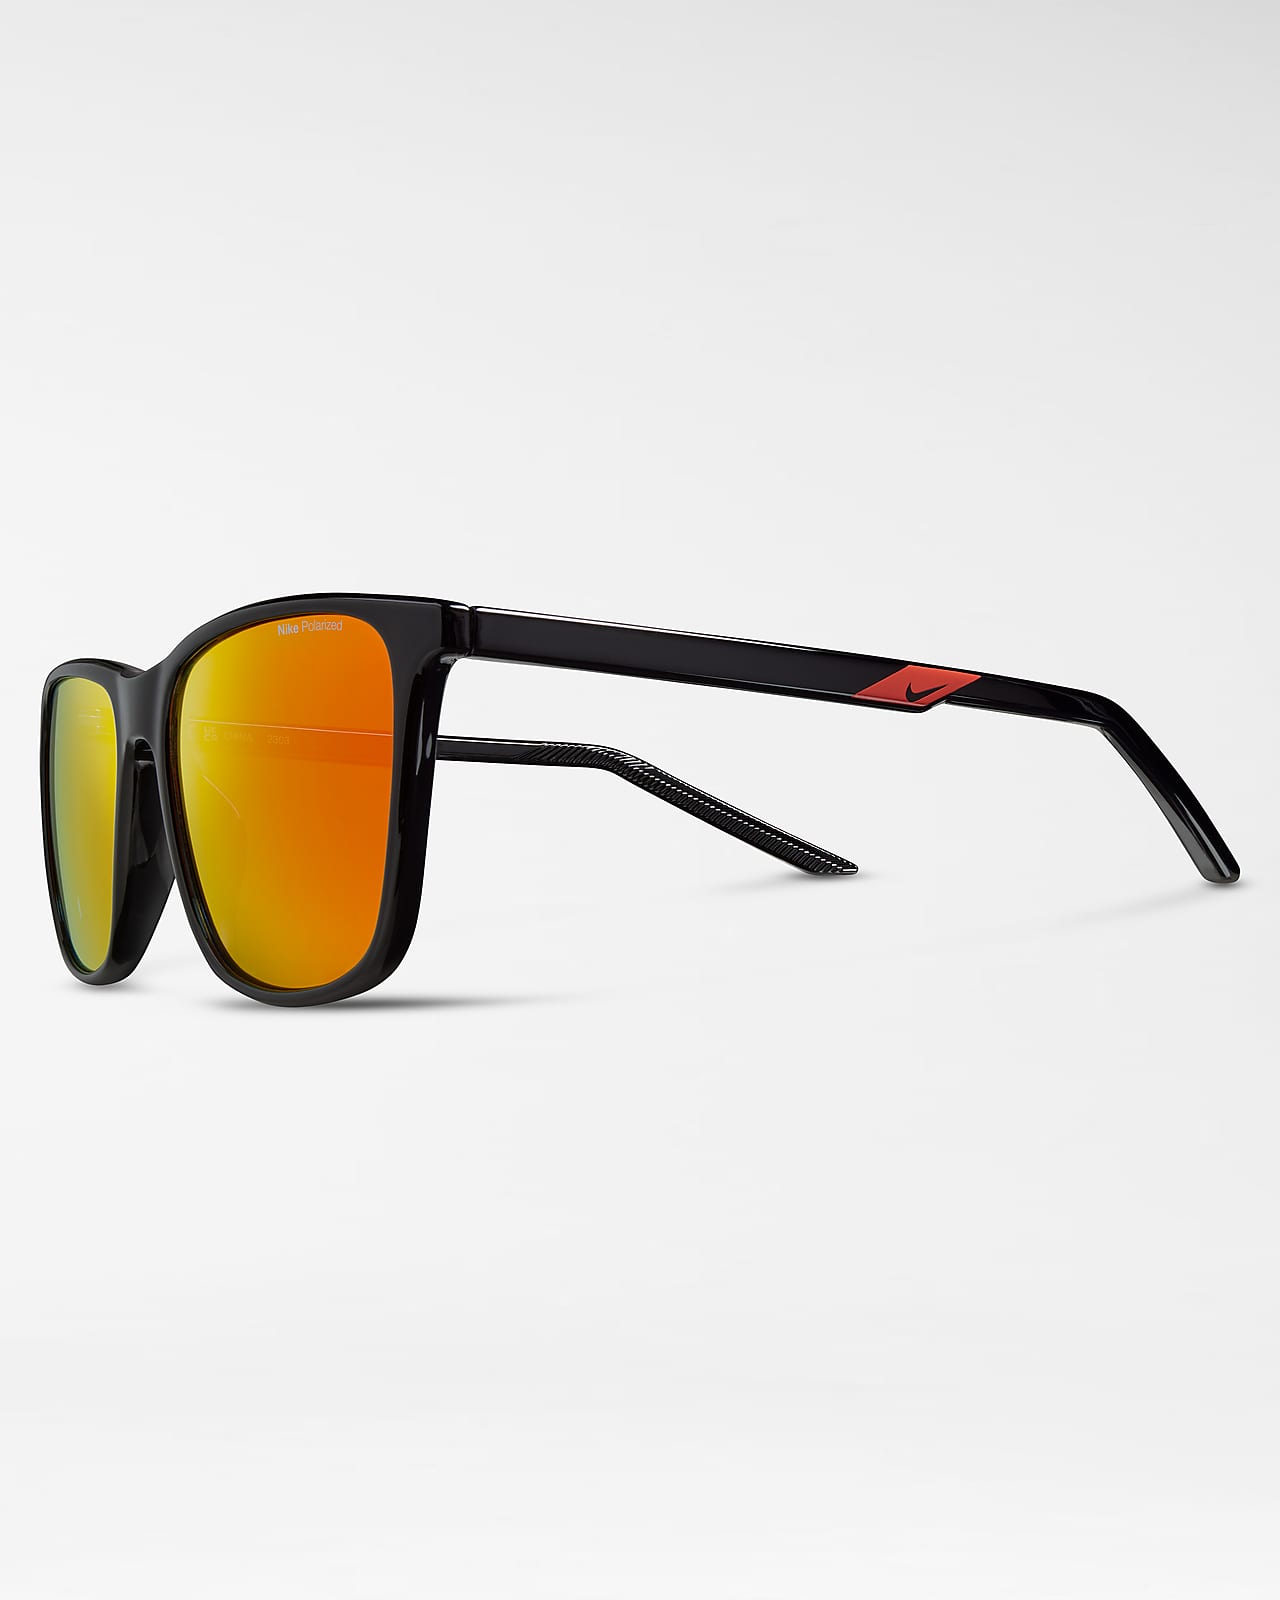 Nike State Polarized Sunglasses